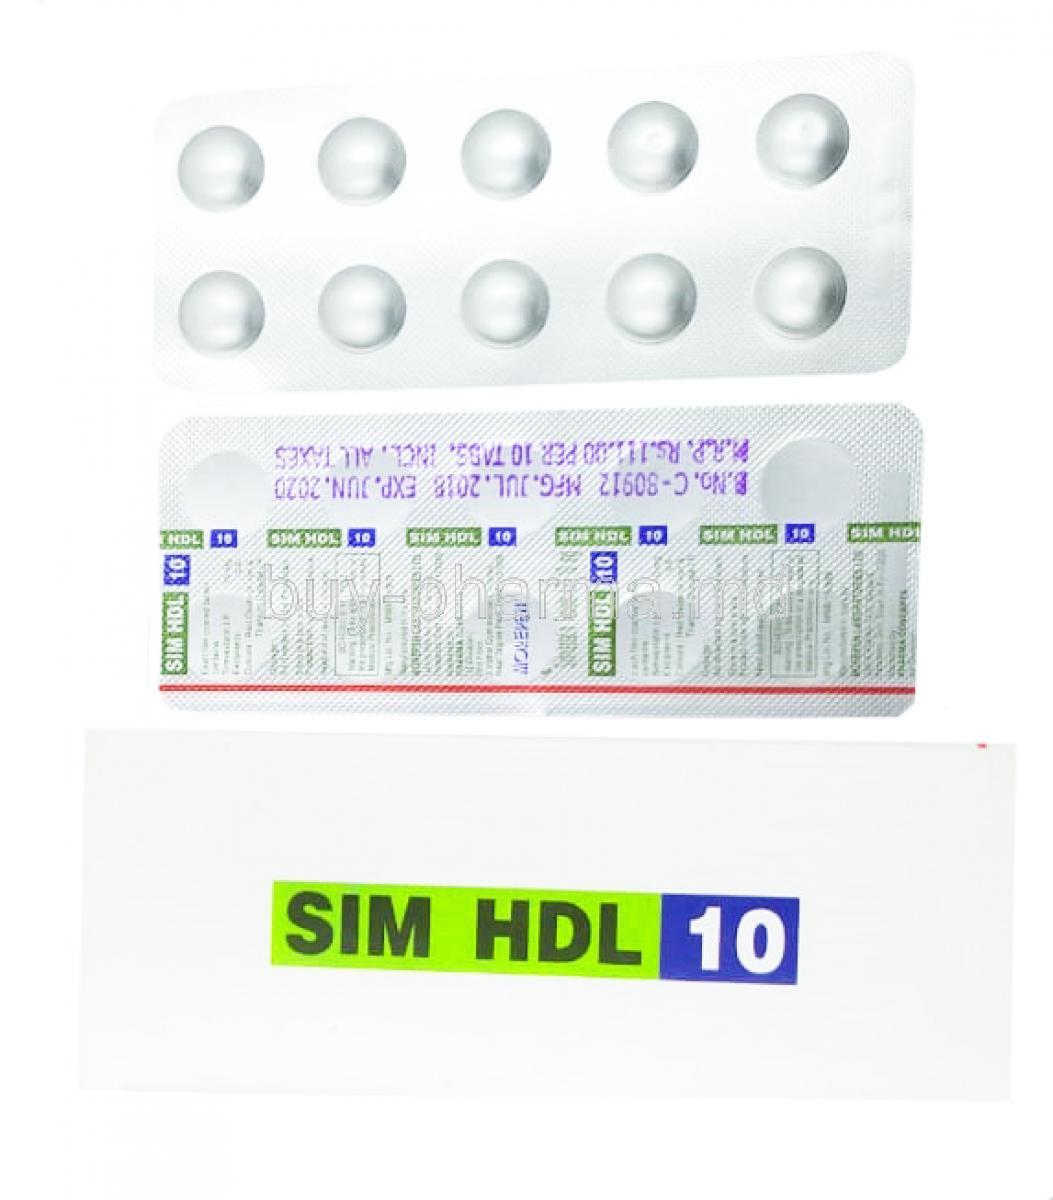 SIM HDL, Simvastatin, 10 mg, box and blister pack